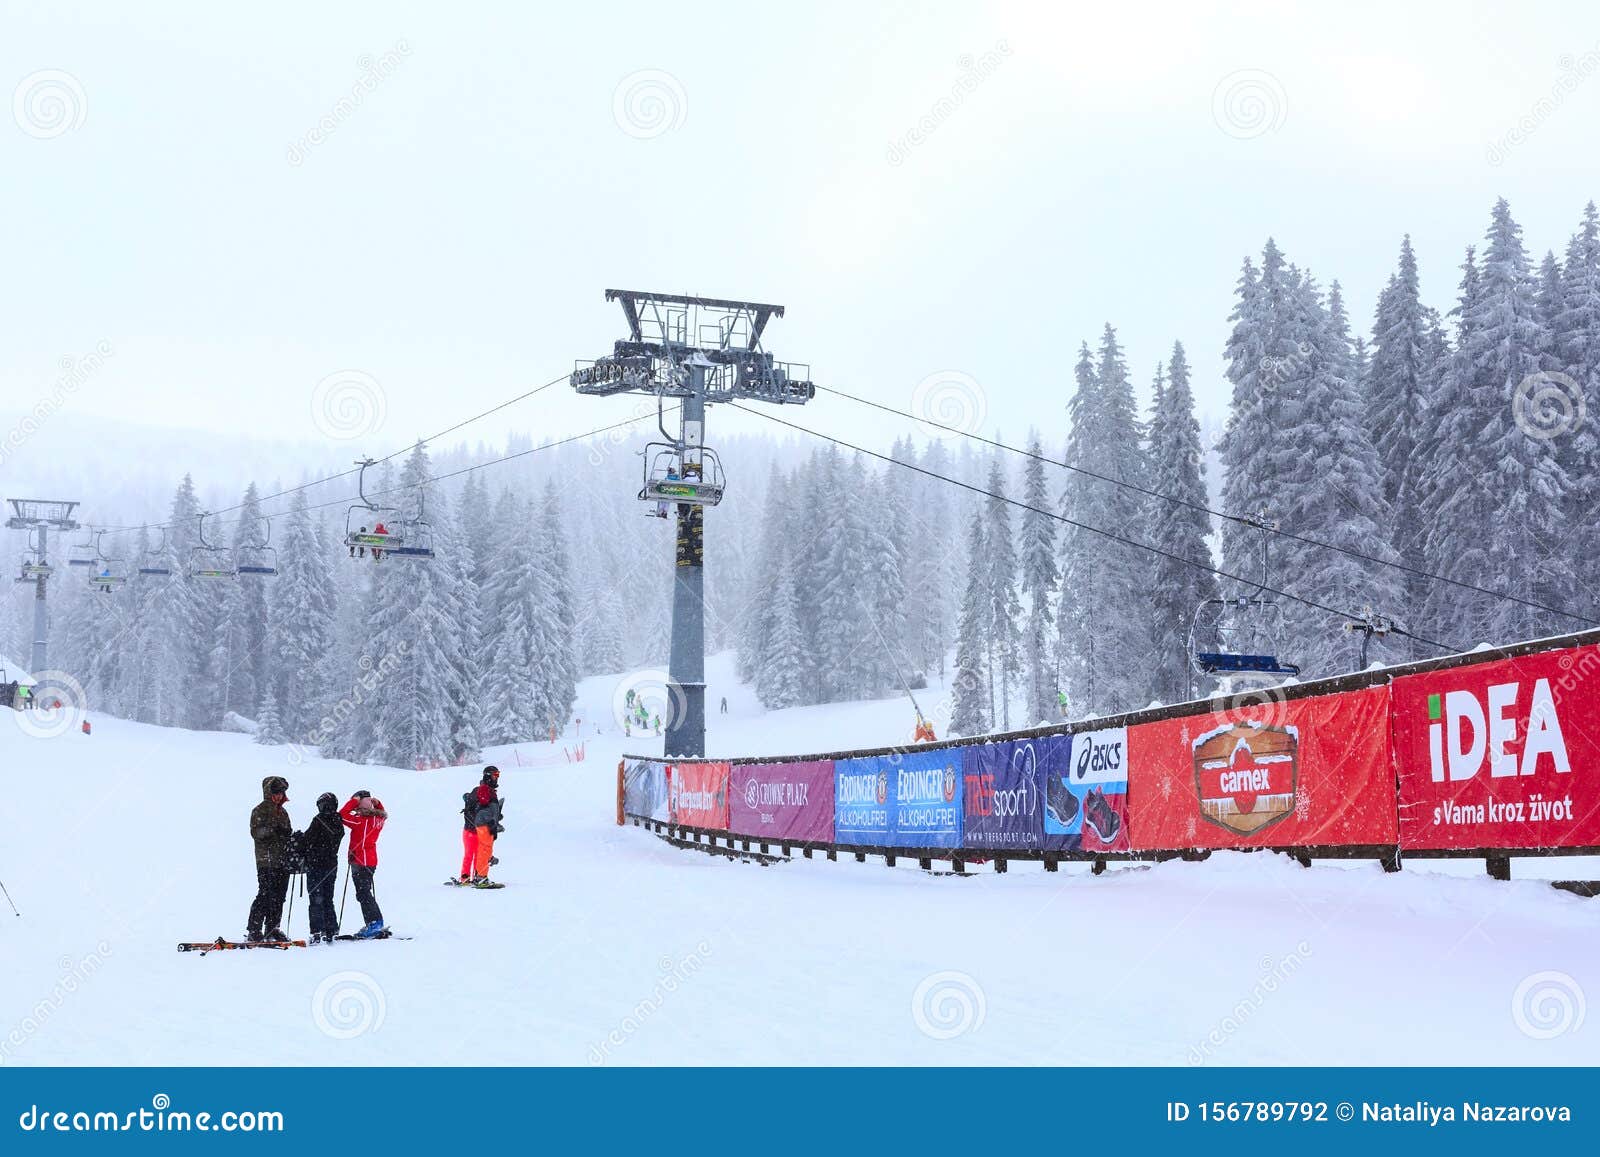 Panorama of Ski Resort Kopaonik, Serbia Editorial Photography - Image ...